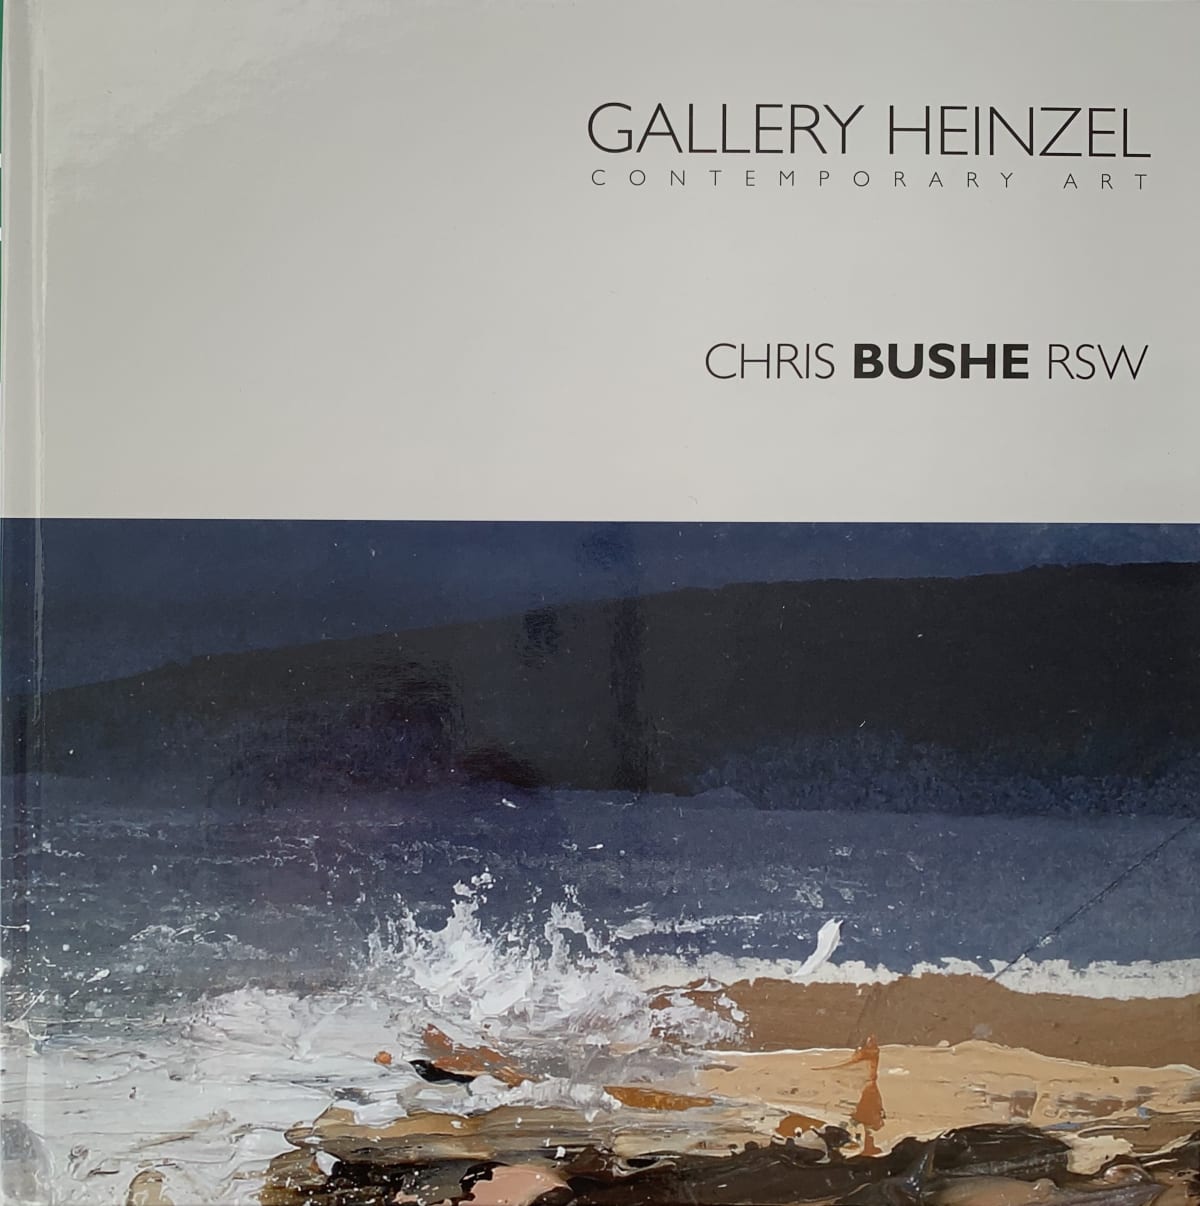 Gallery Heinzel presents CHRIS BUSHE RSW